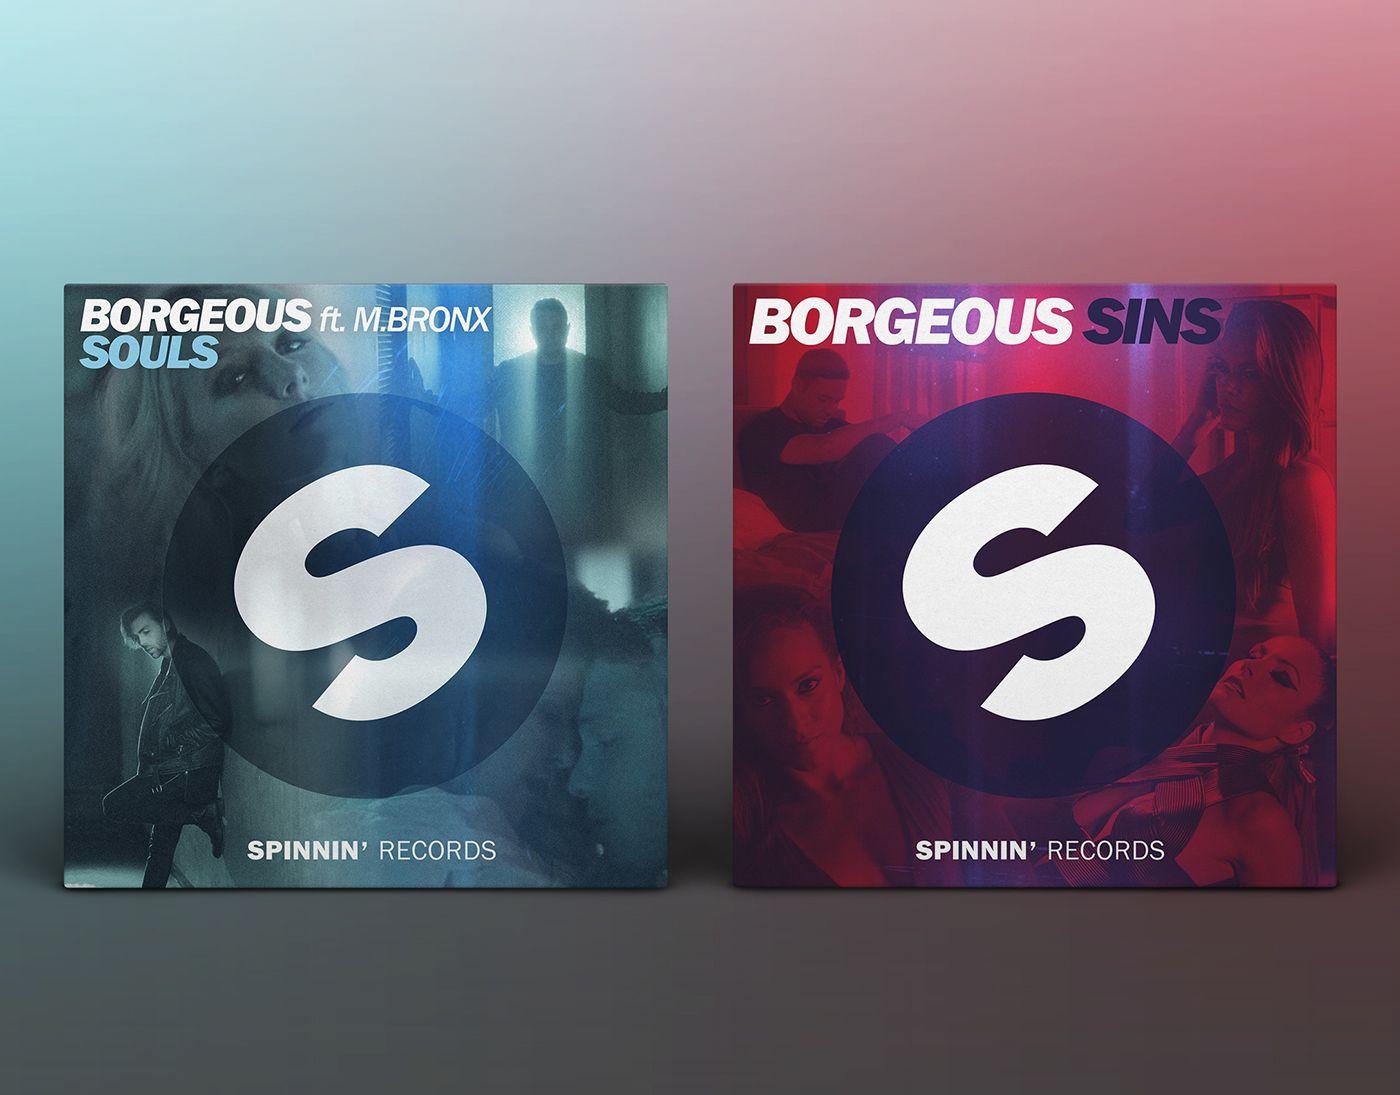 Borgeous Logo - Borgeous - Souls & Sins on Behance